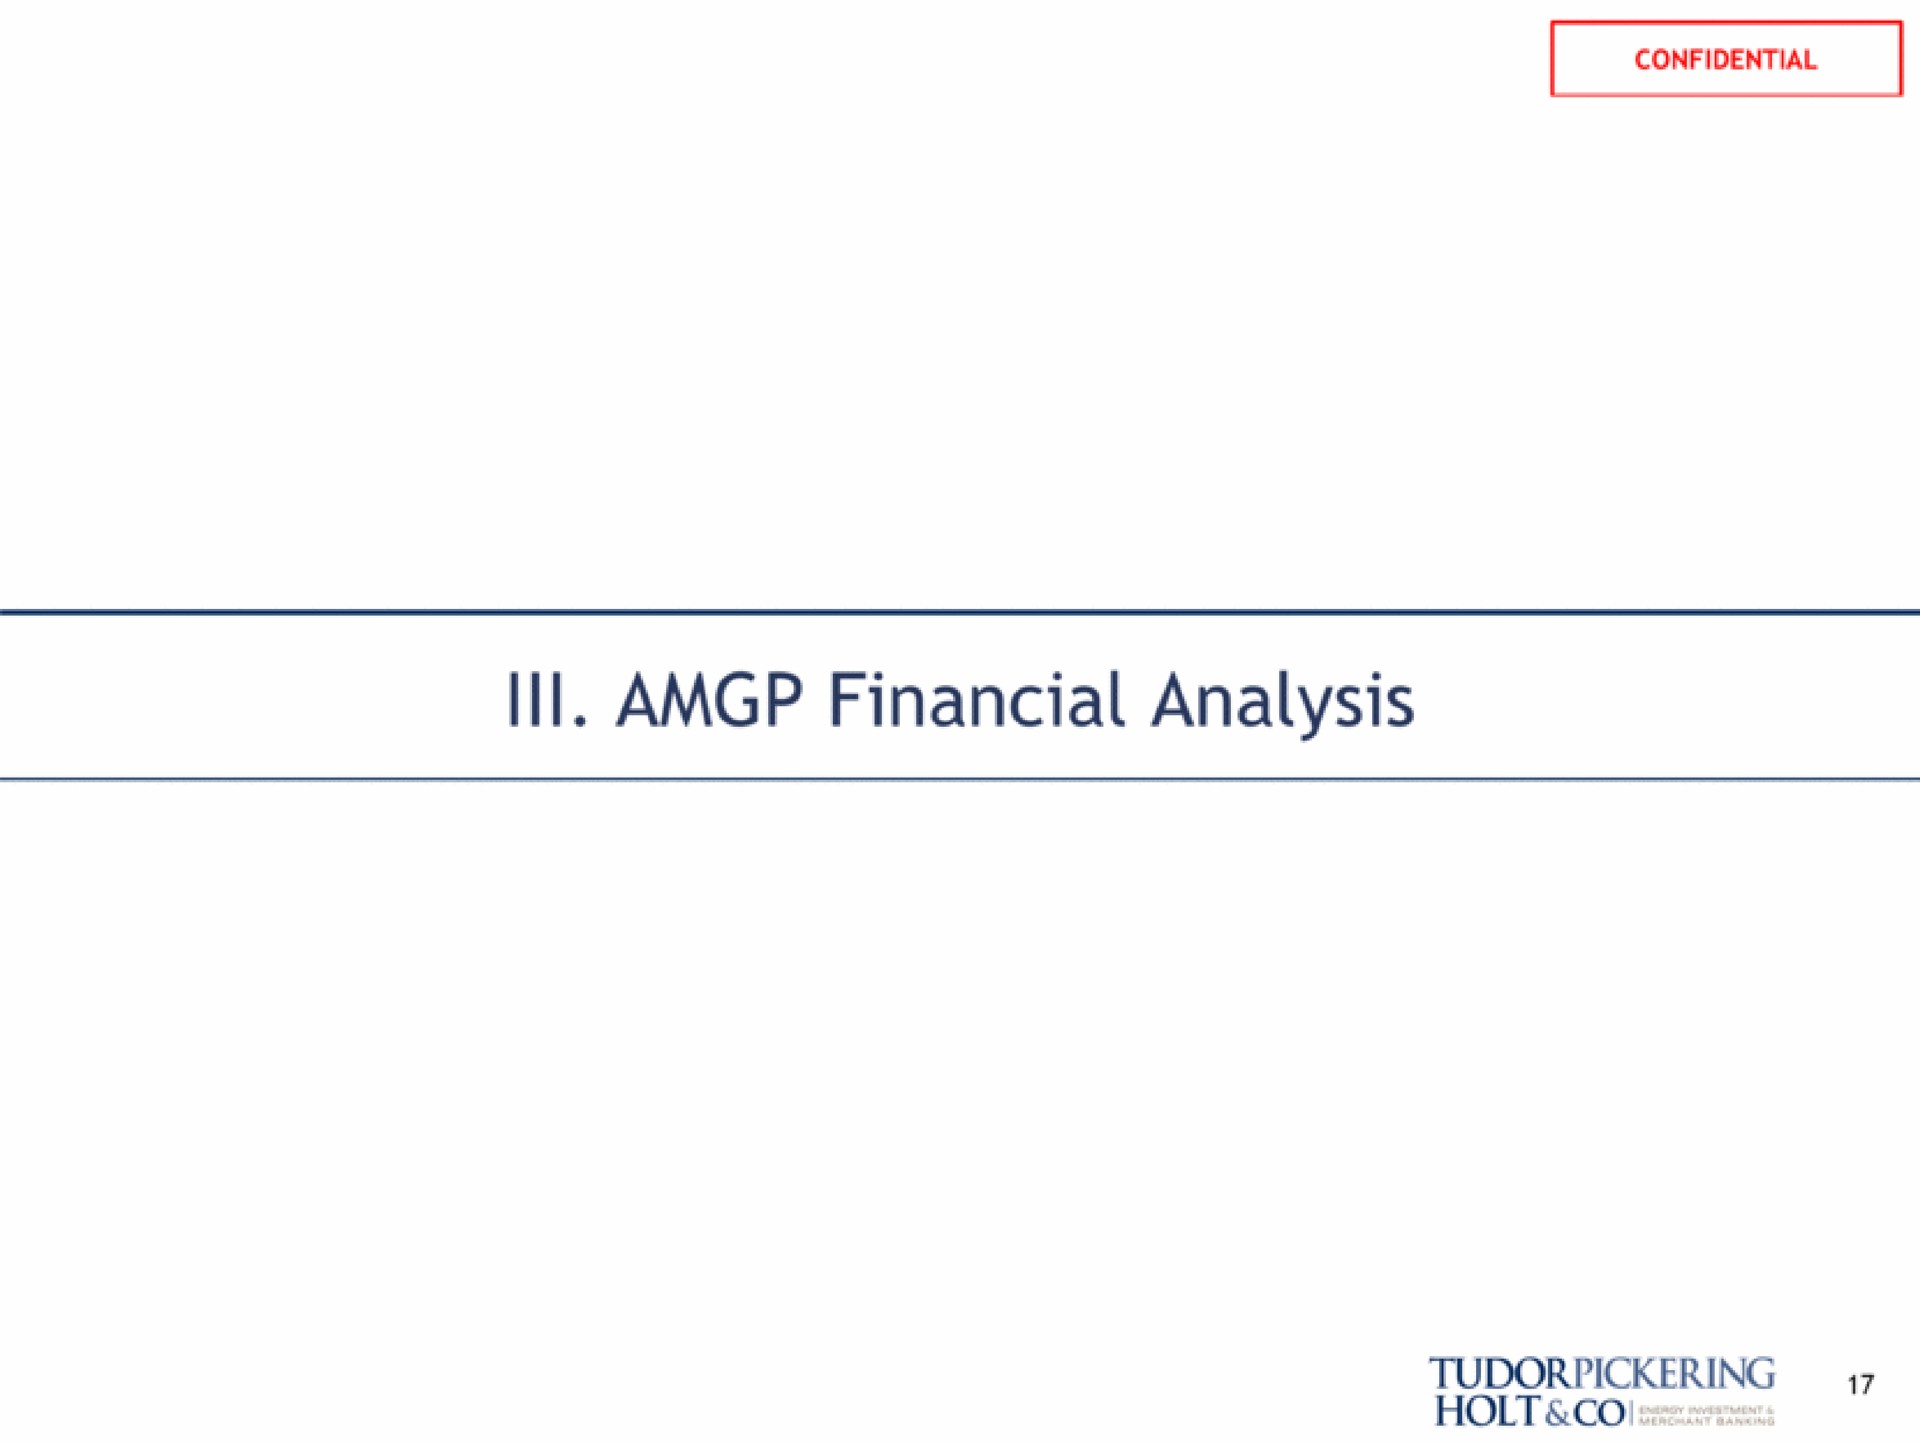 financial analysis holt | Tudor, Pickering, Holt & Co